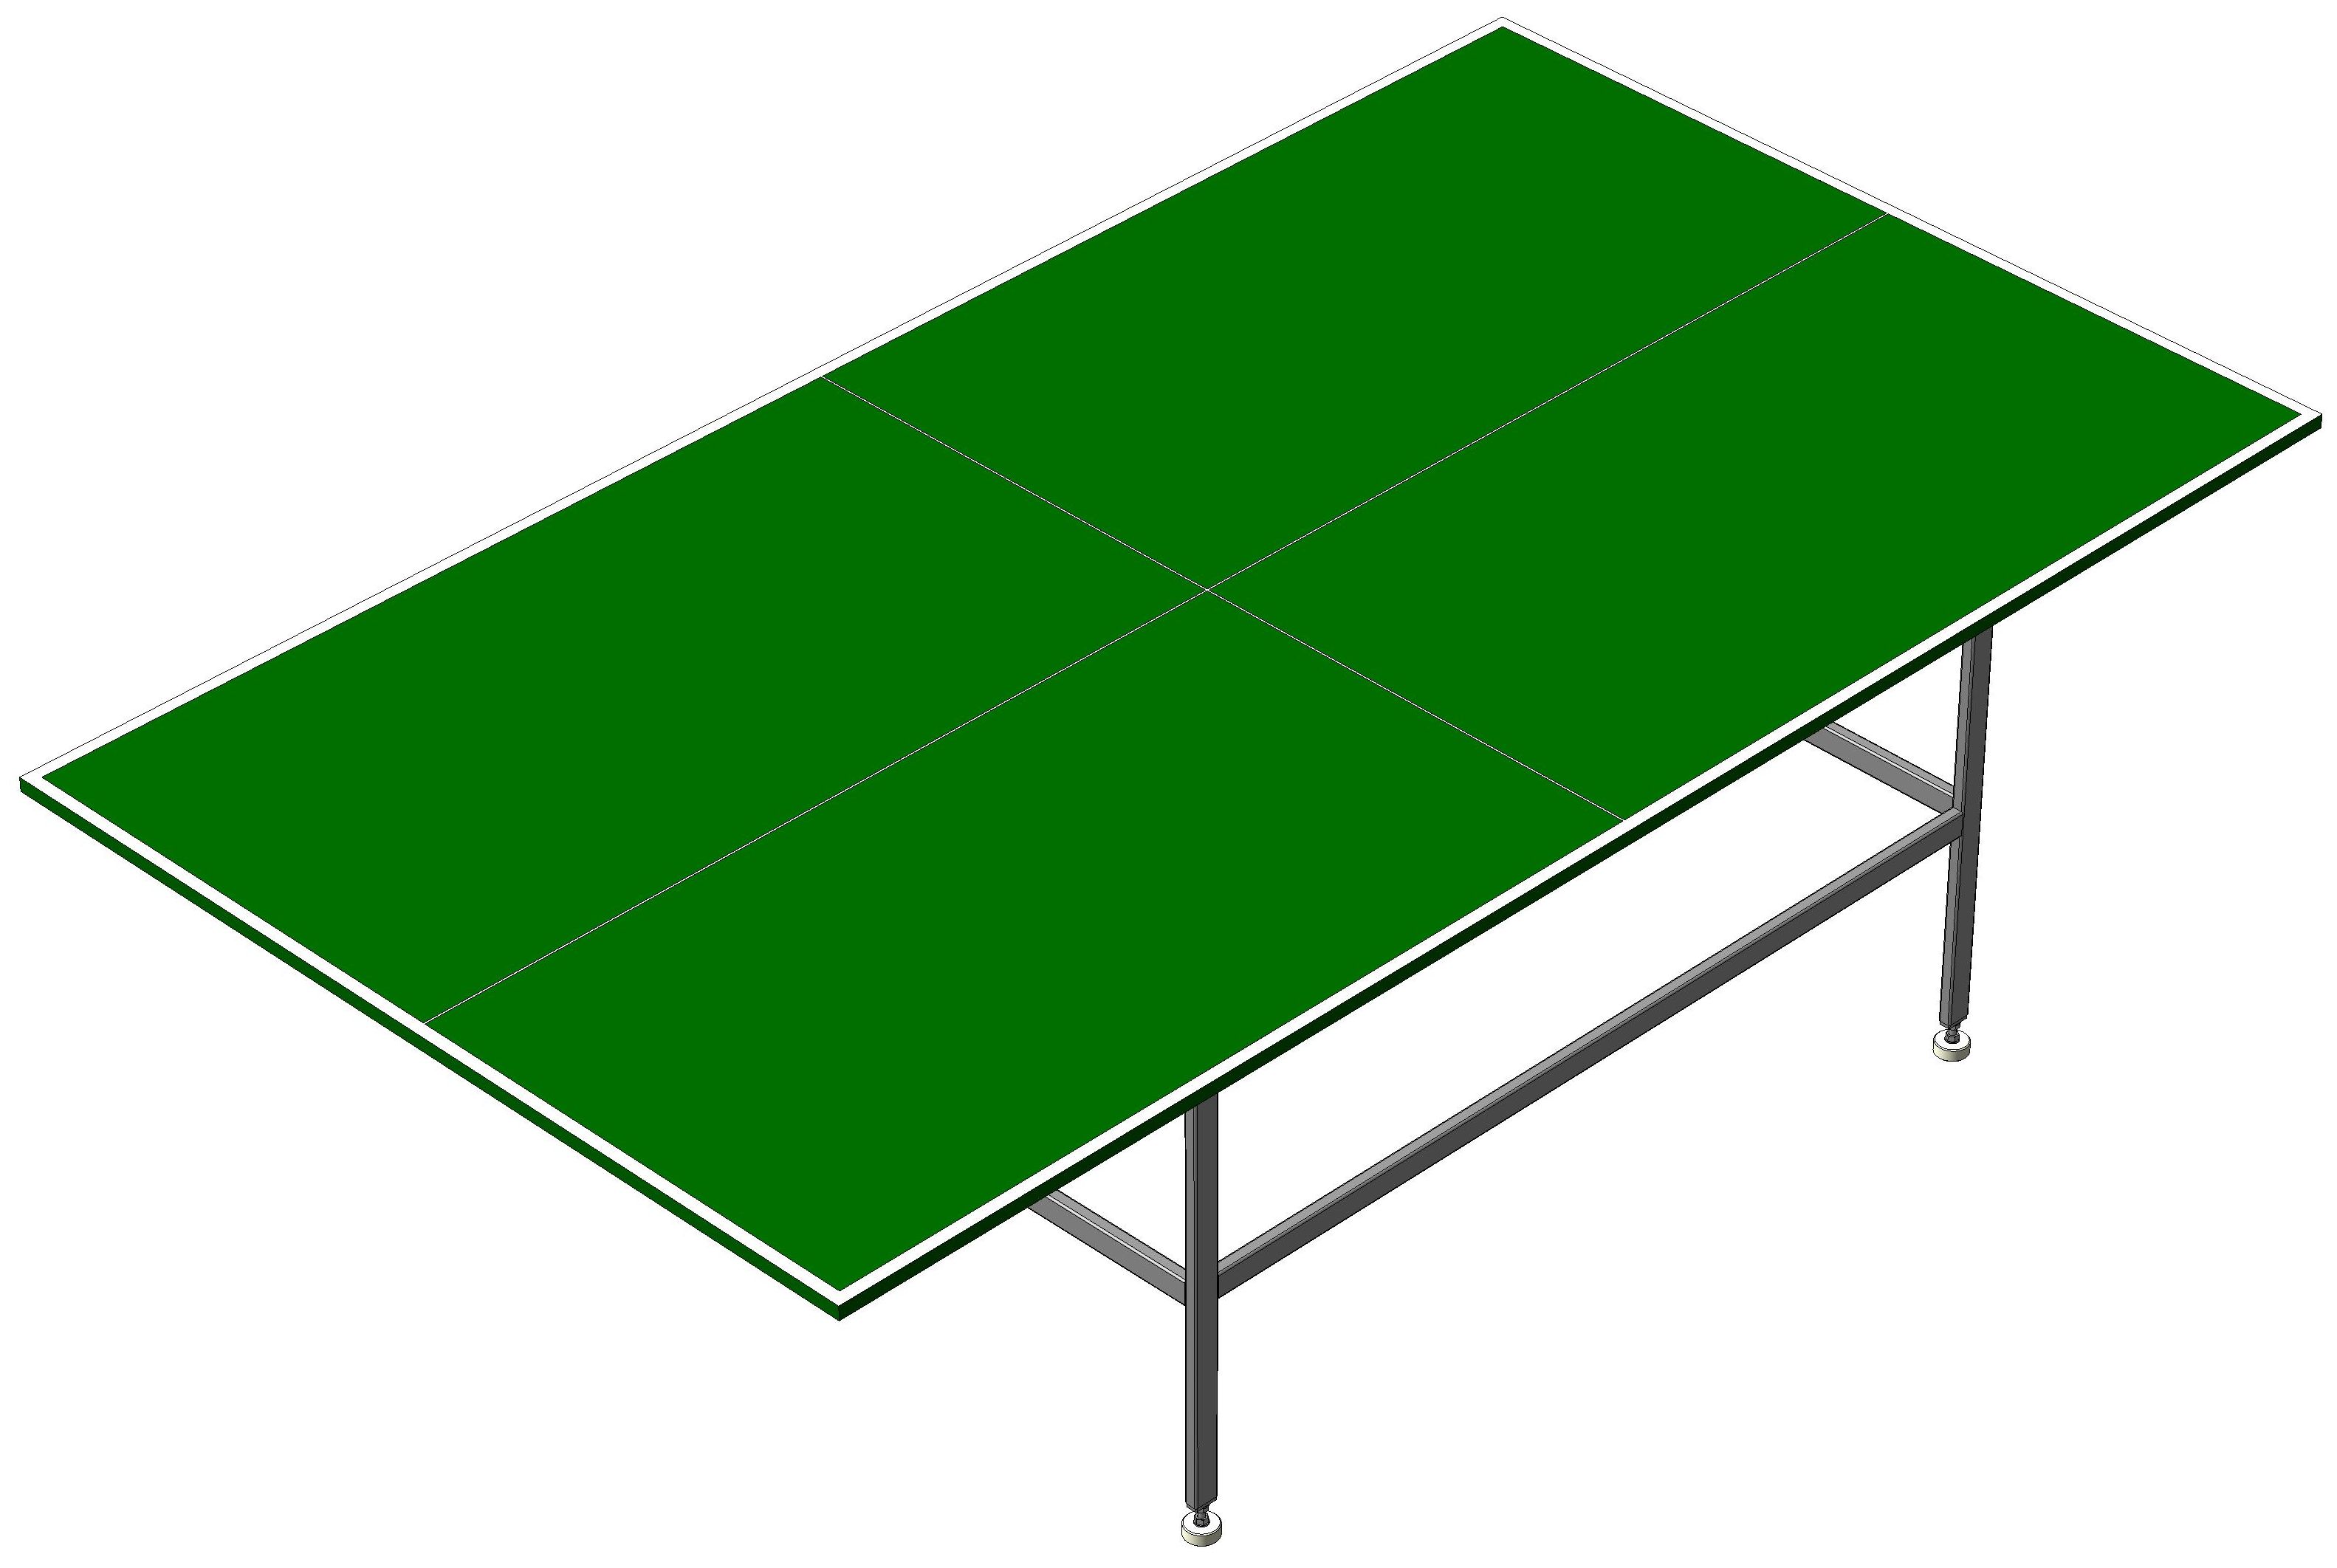 Стандарты стола для пинг понга